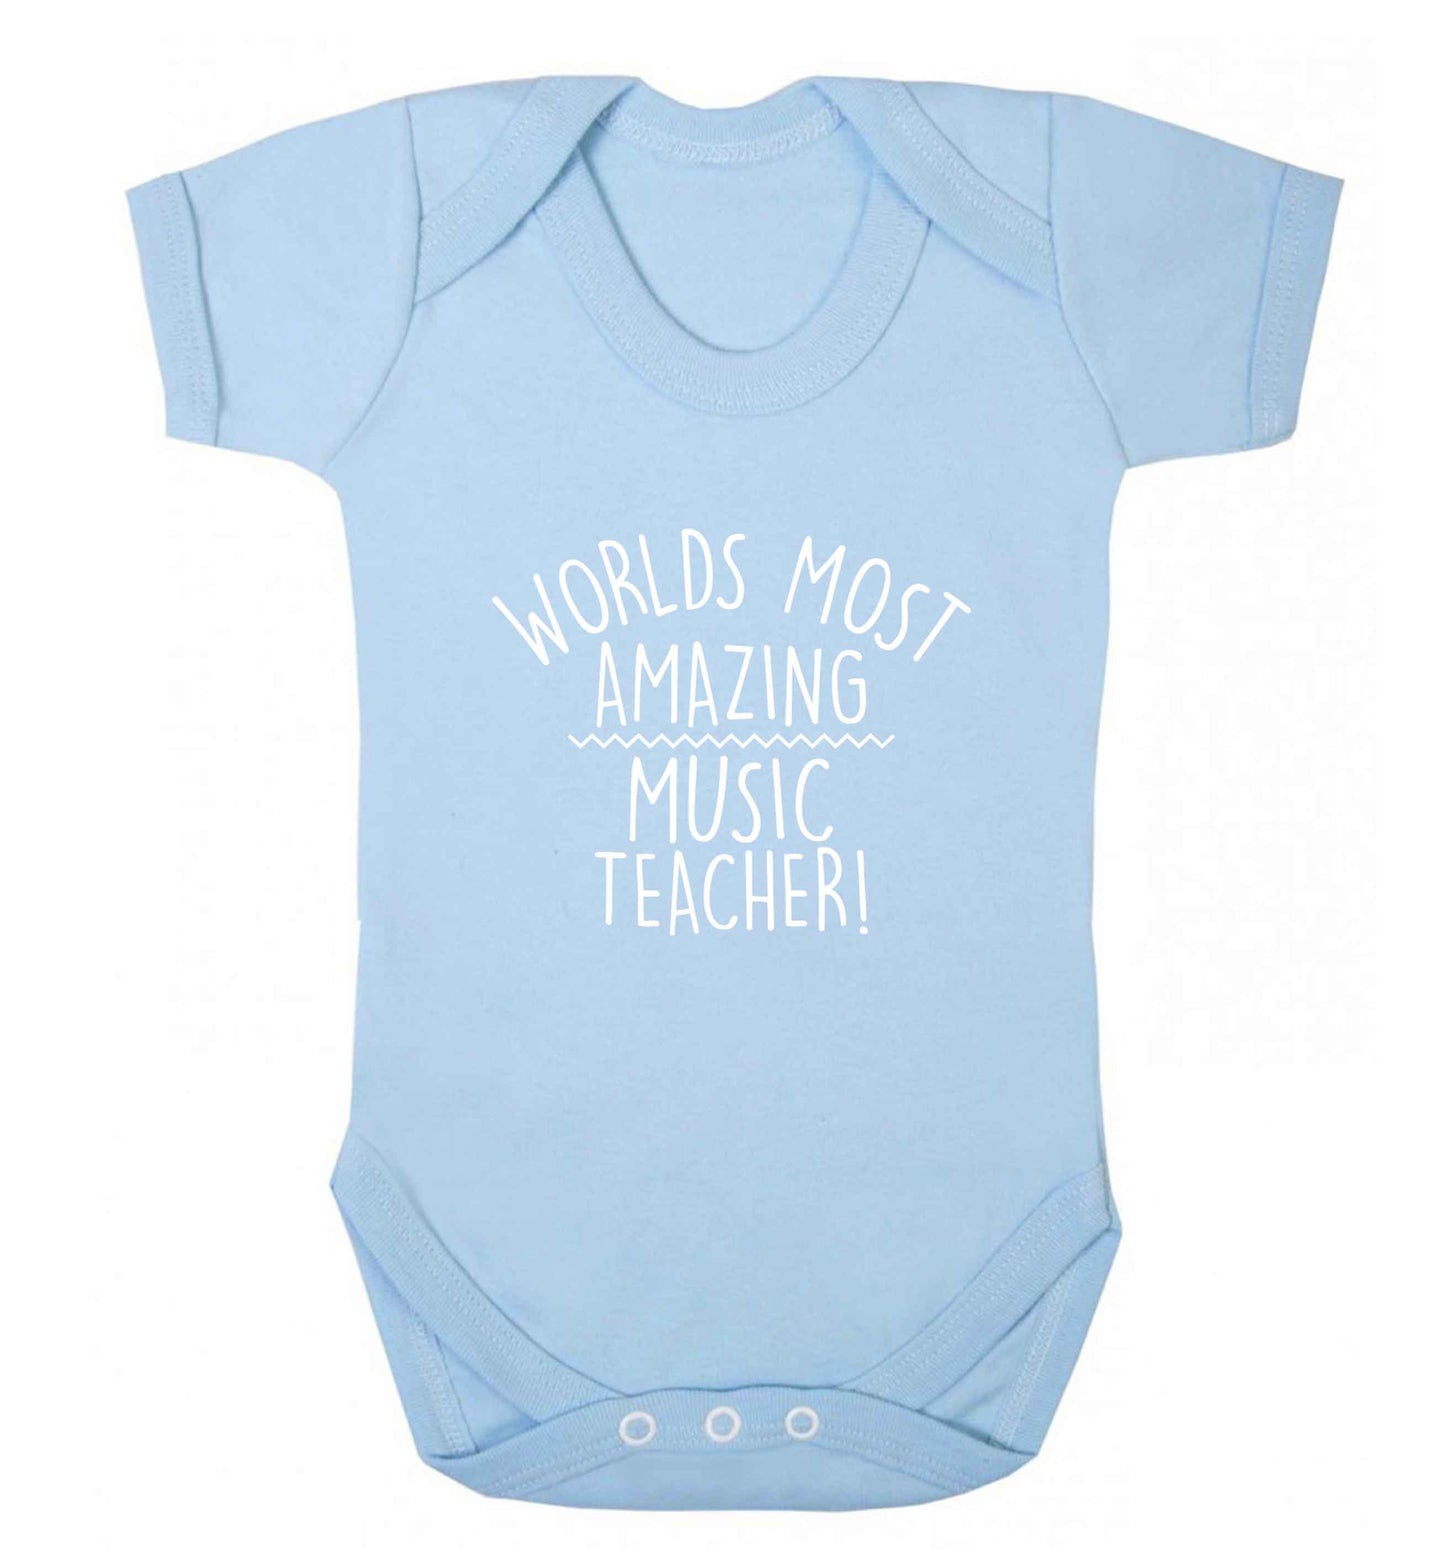 Worlds most amazing music teacher baby vest pale blue 18-24 months